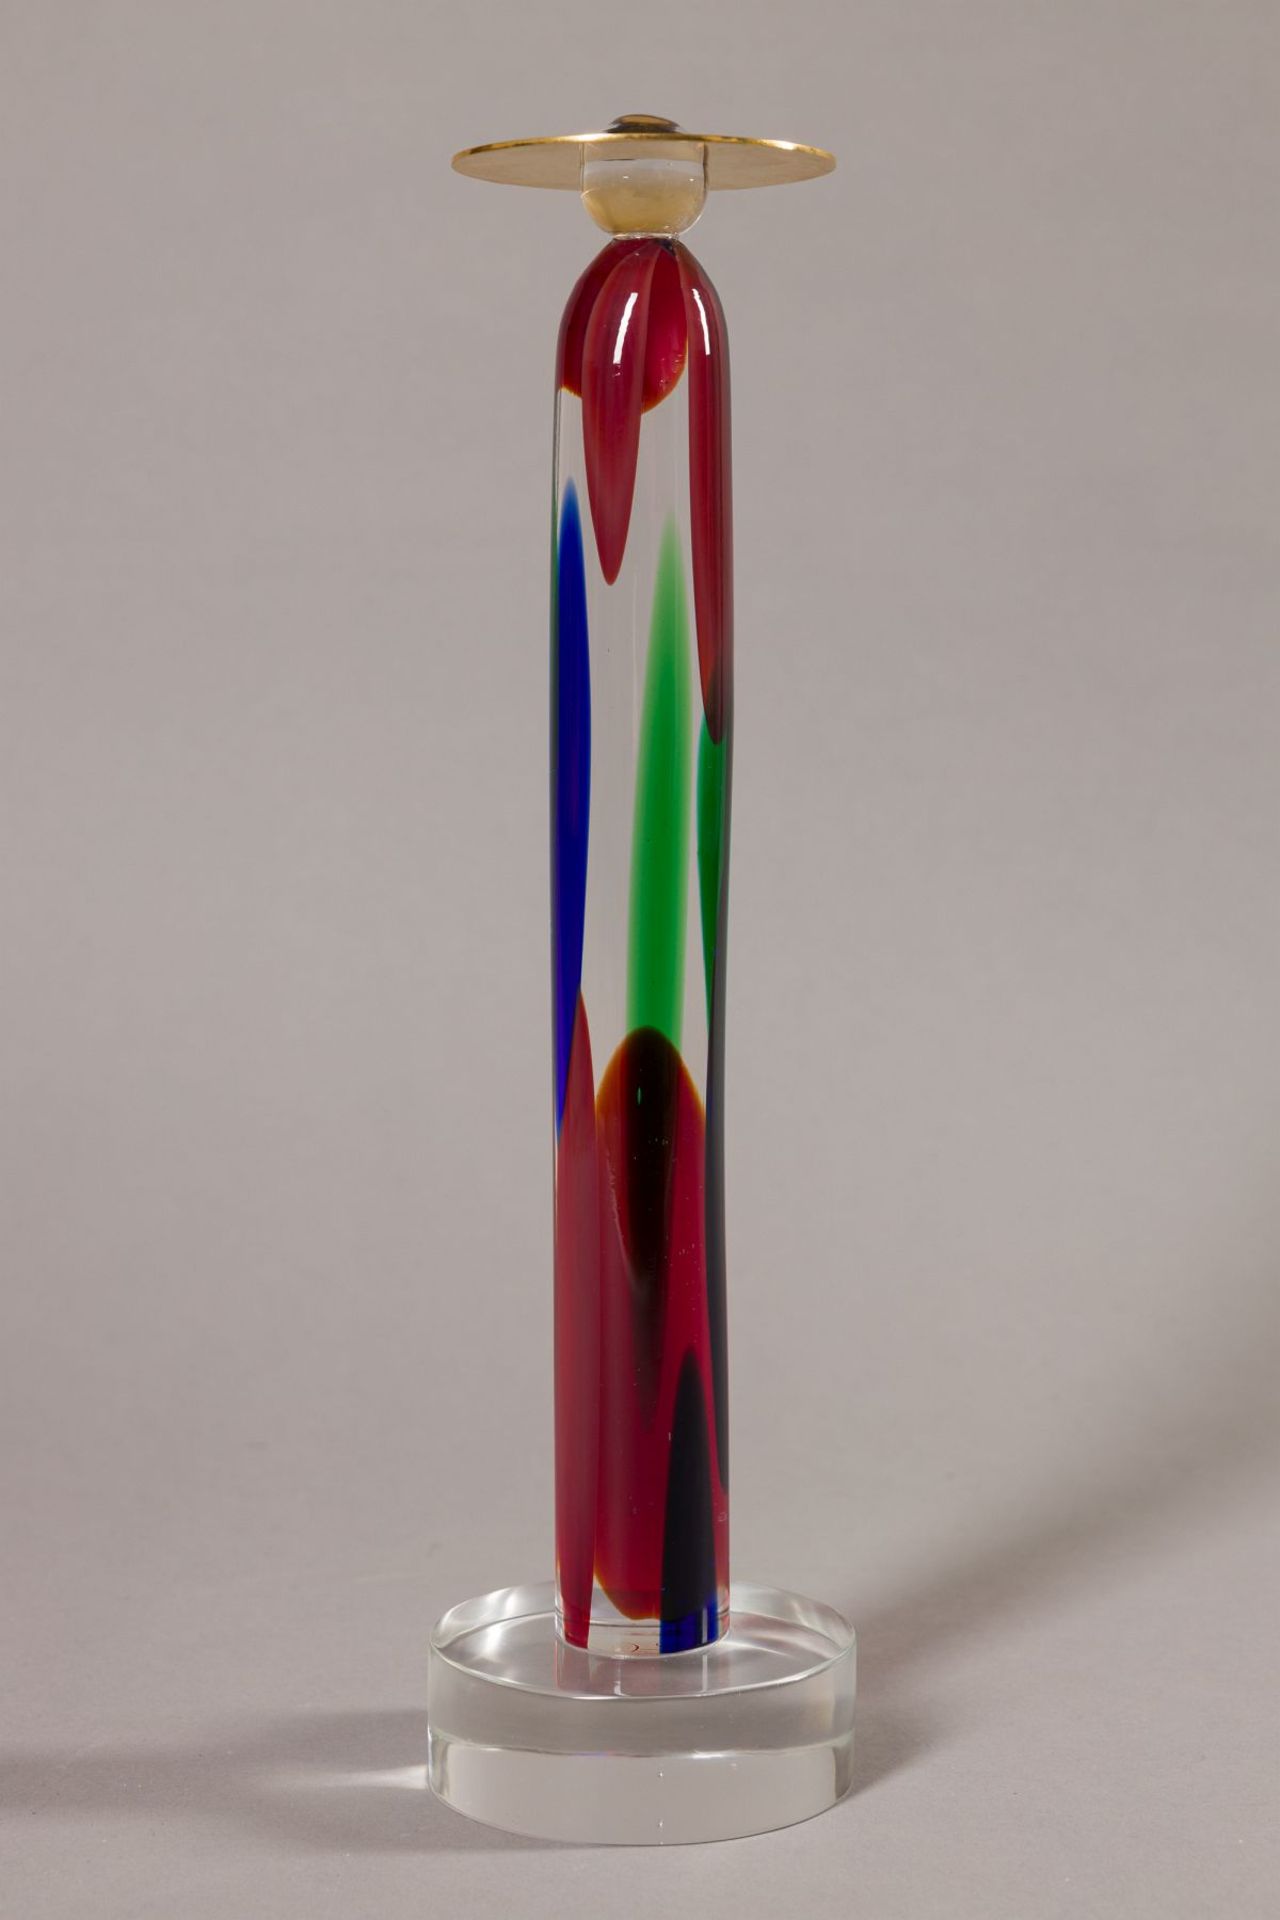 HELLDENMUT(*1961)Angelo Iglass sculpture (Murano glass), disc in brassH: 15,4 in / W & D: 3,9 inAn